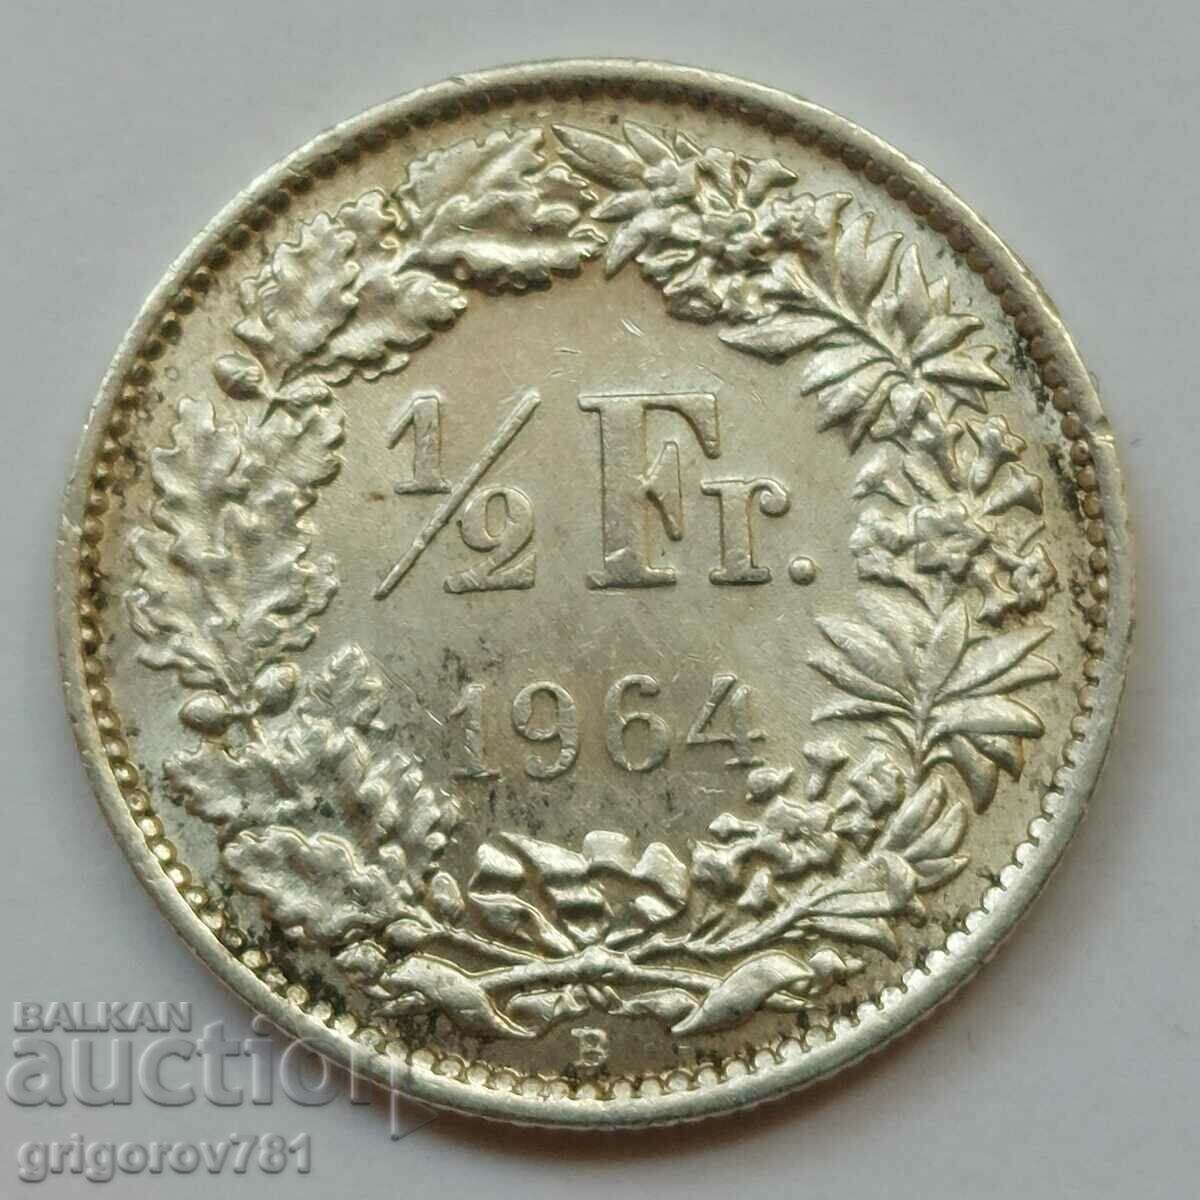 1/2 franc argint Elveția 1964 B - monedă de argint